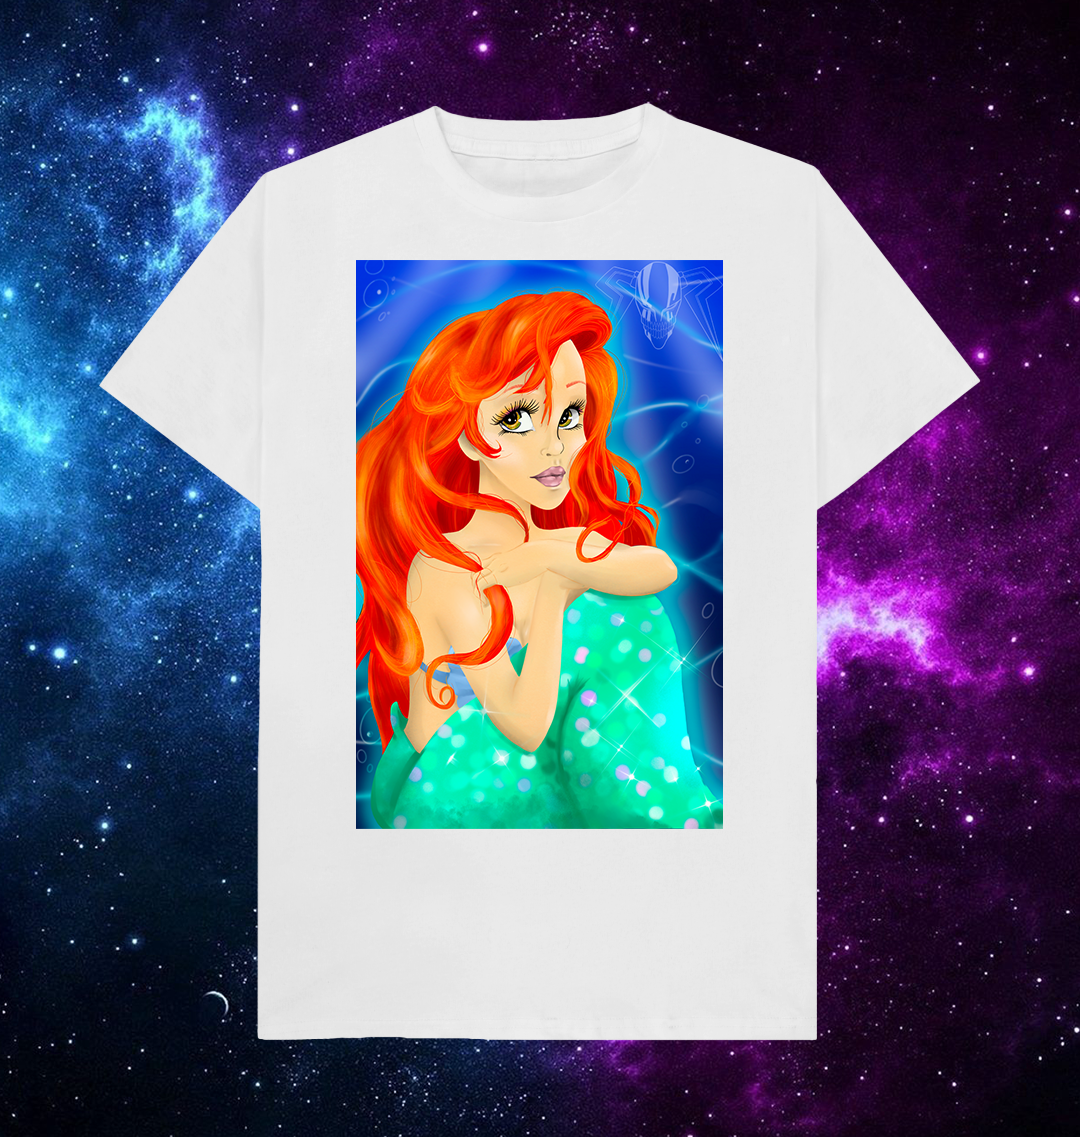 Ariel the Mermaid by Kyle Cook Artist T-Shirt